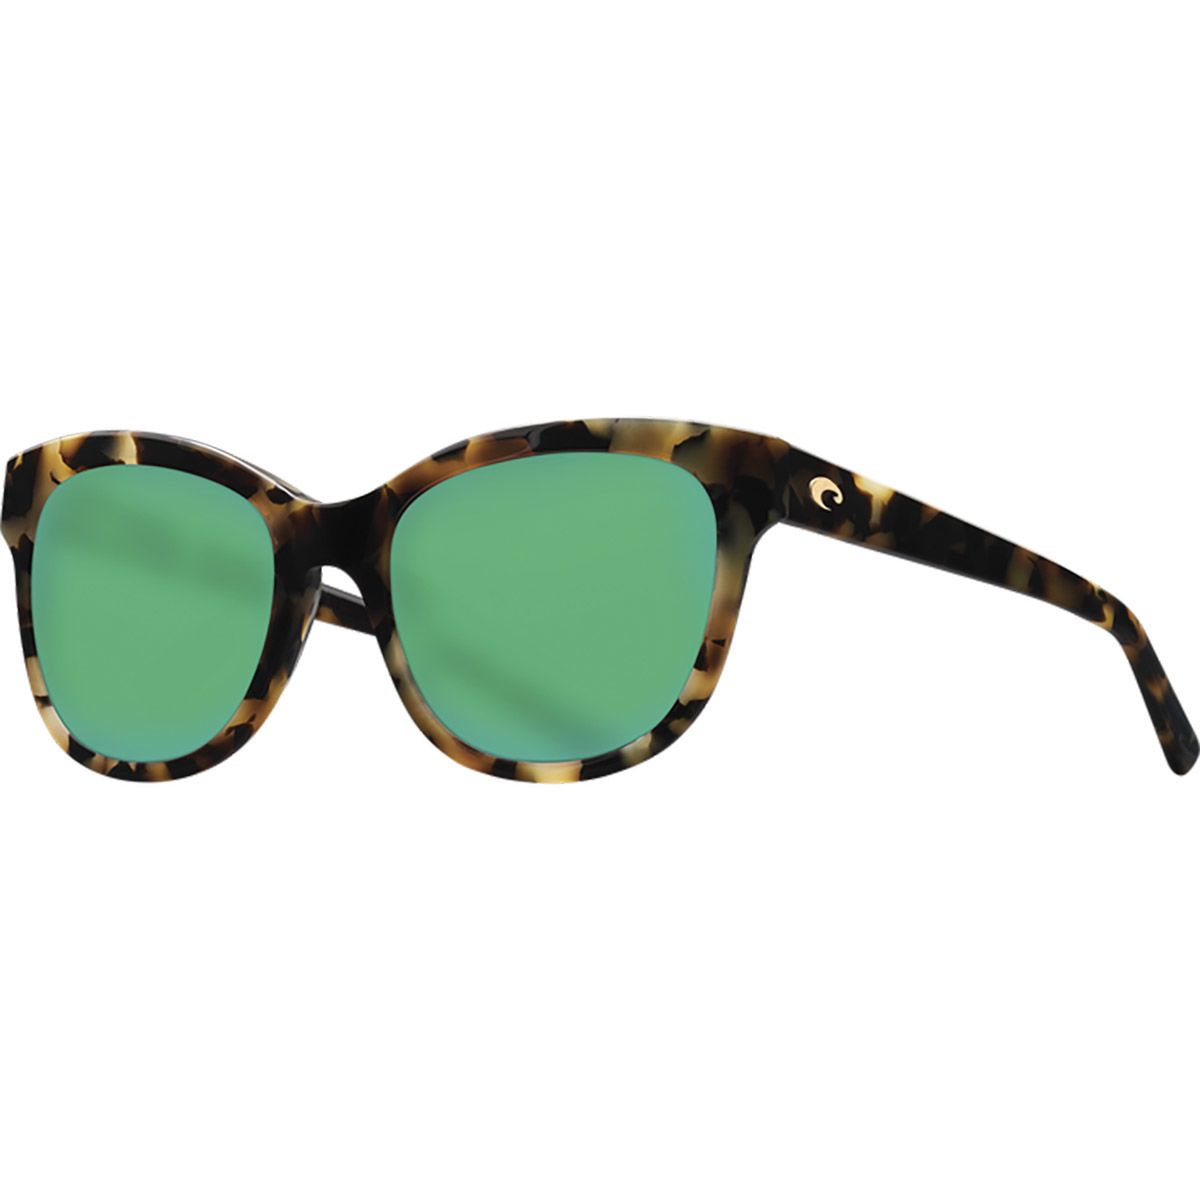 Costa Bimini 580G Polarized Sunglasses - Women's